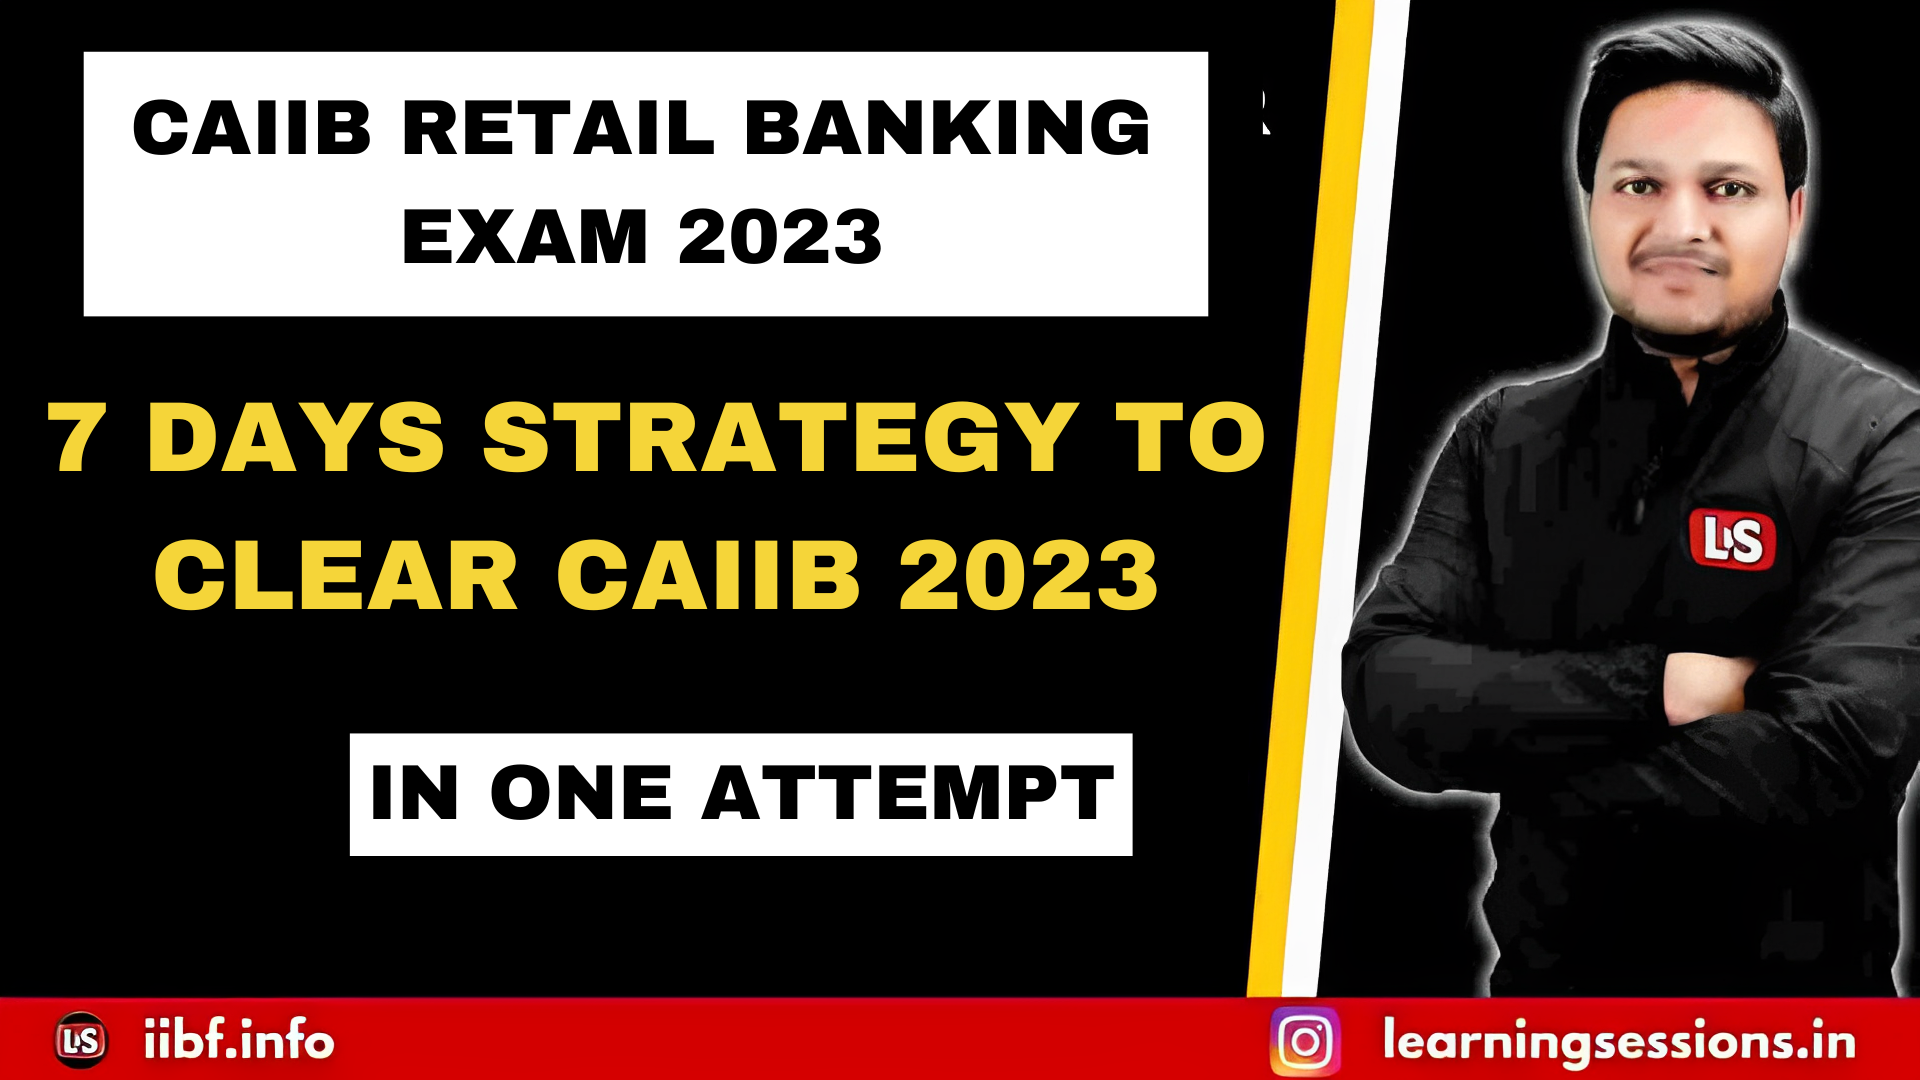 CAIIB RETAIL BANKING EXAM 2023